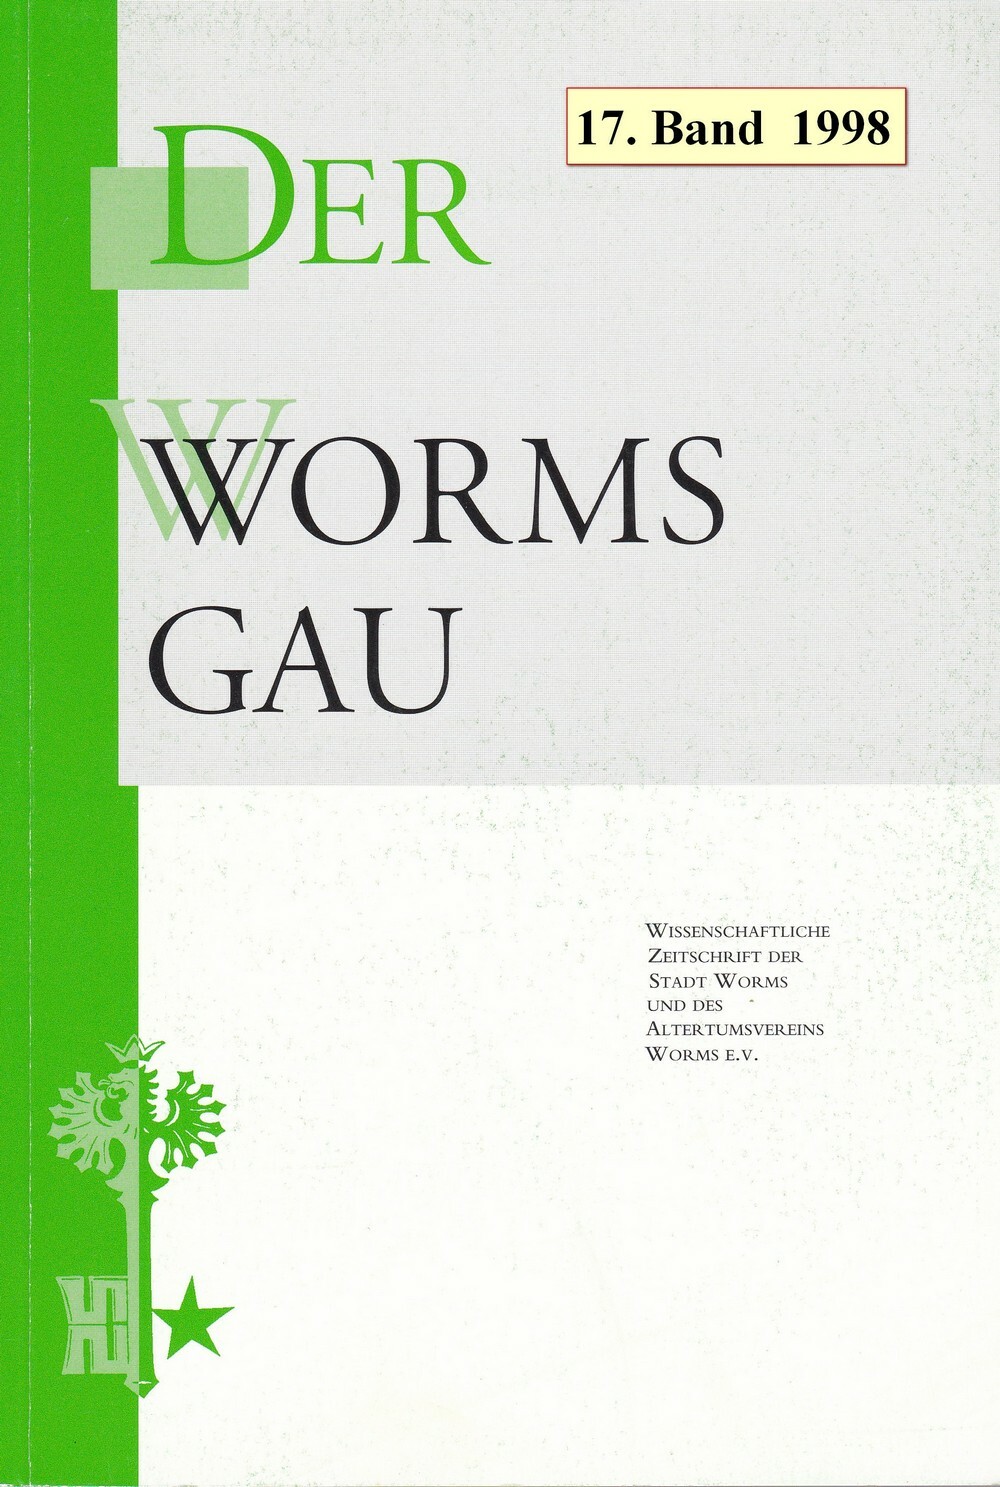 Der Wormsgau 17. Band - 1998 (Kulturverein Guntersblum CC BY-NC-SA)